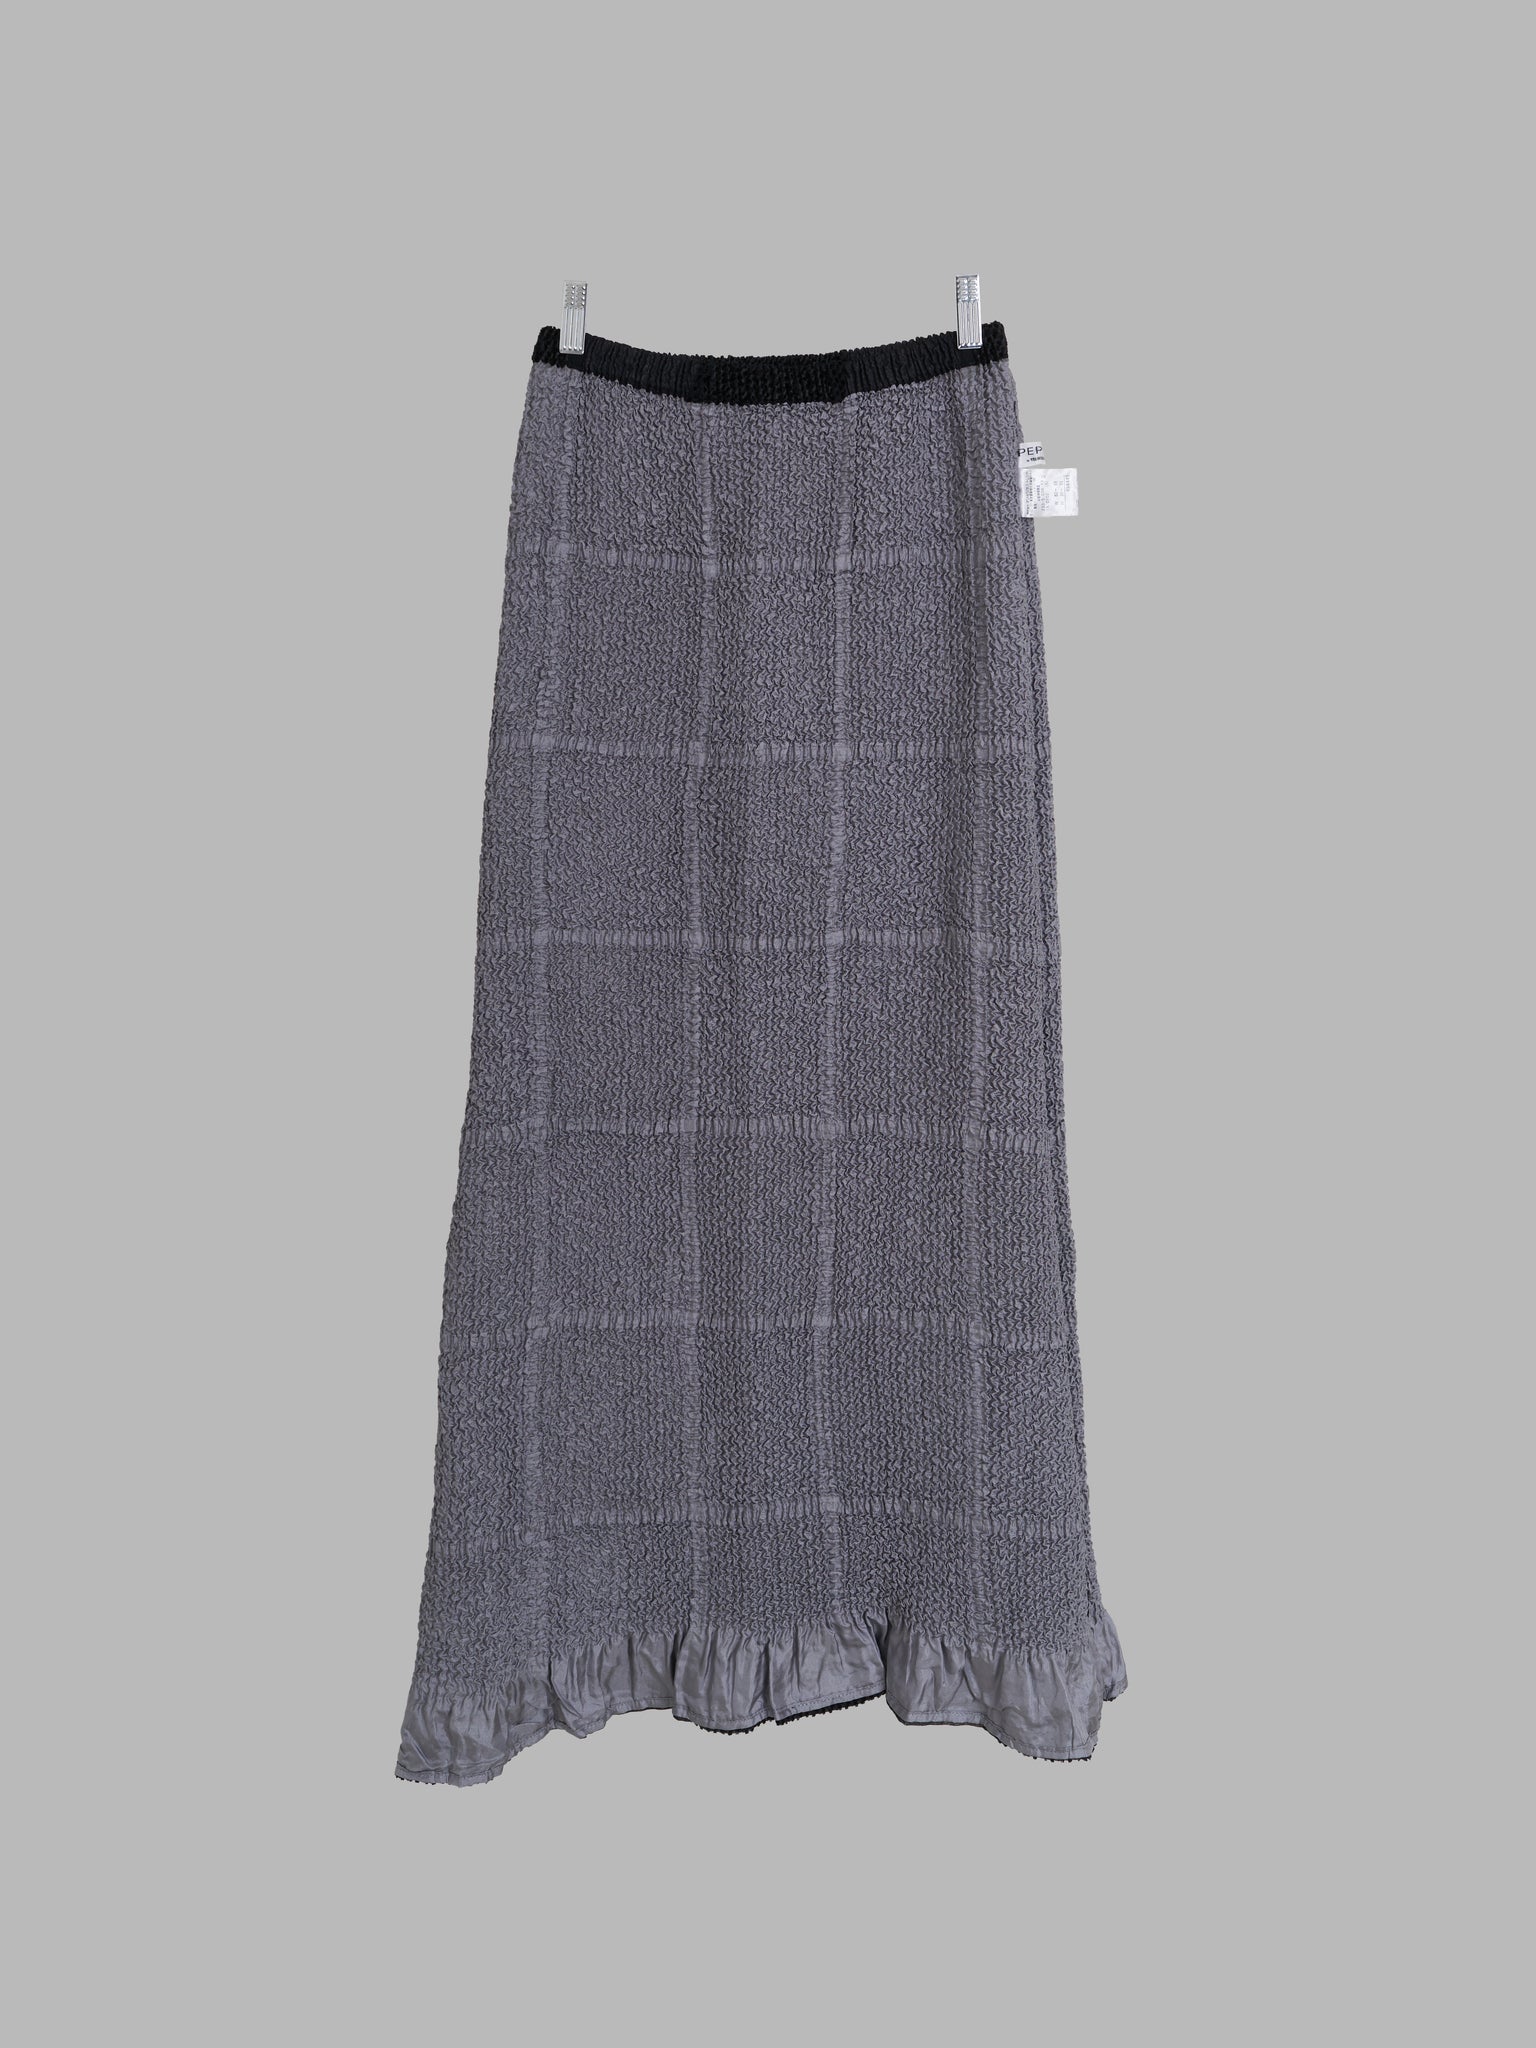 Yoshiki Hishinuma Peplum black grey check reversible wrinkled ruffle skirt - S M